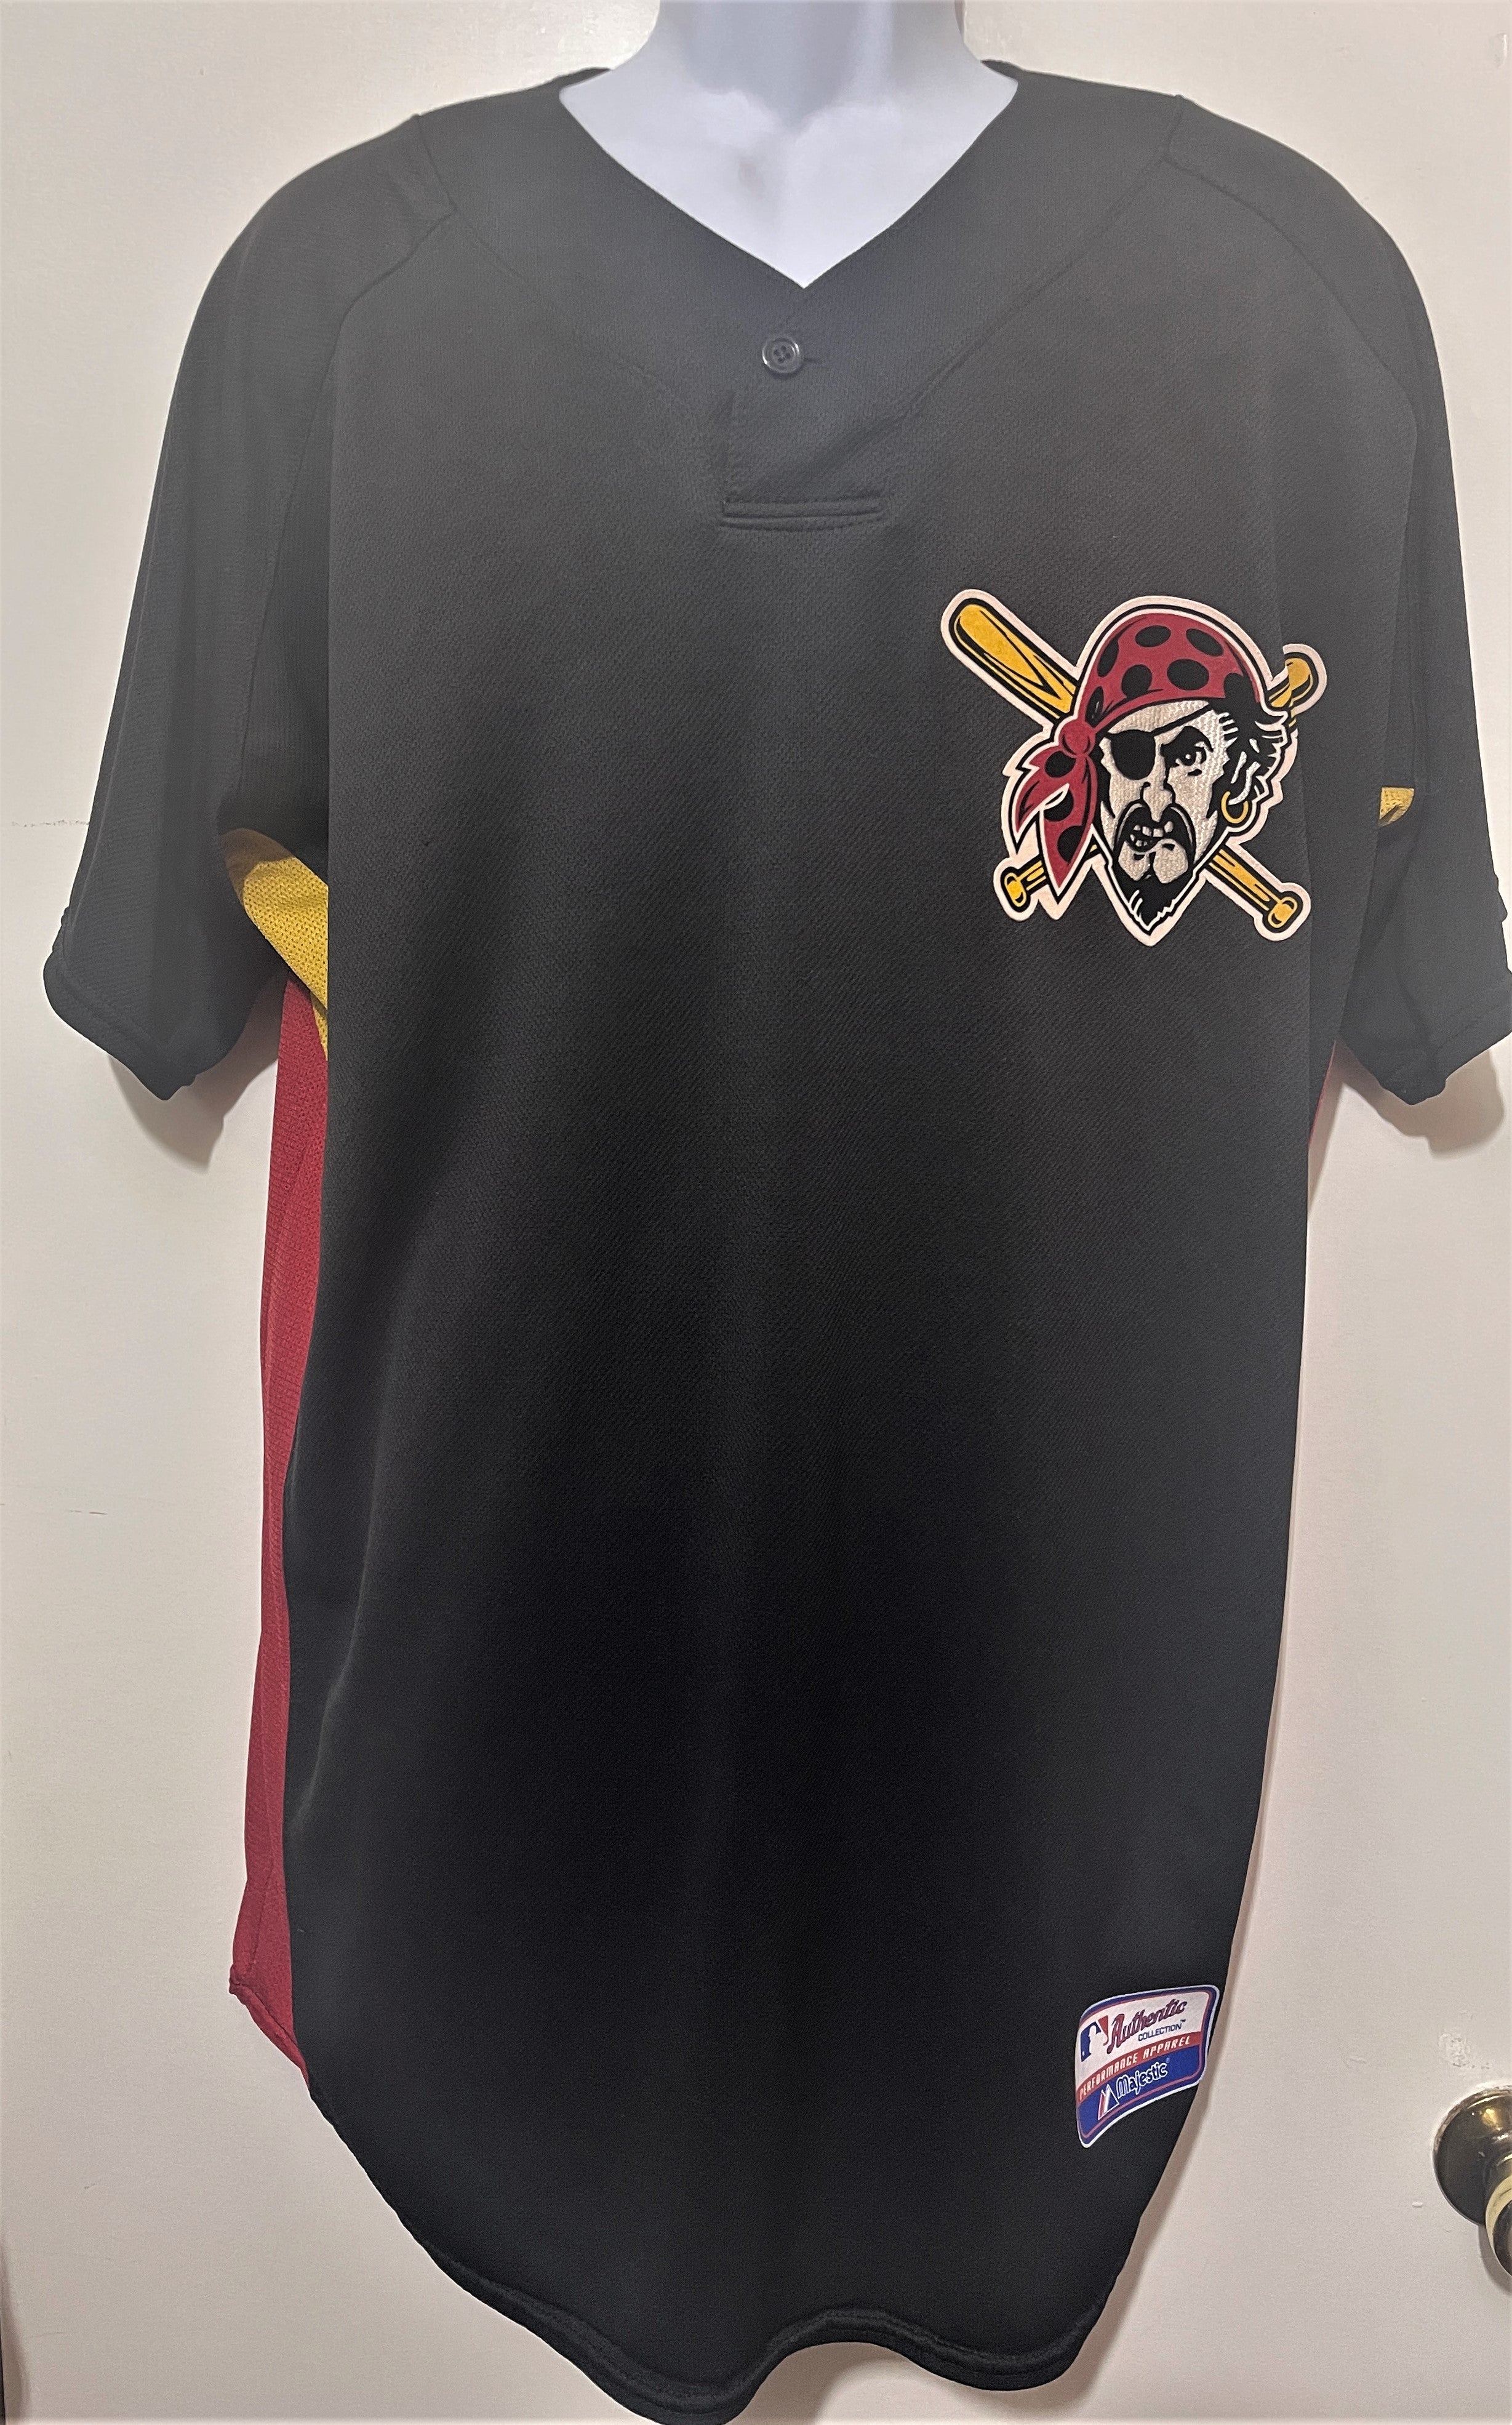 Vintage Pittsburgh Pirates MLB Majestic Baseball Jersey Large Red  Sportswear